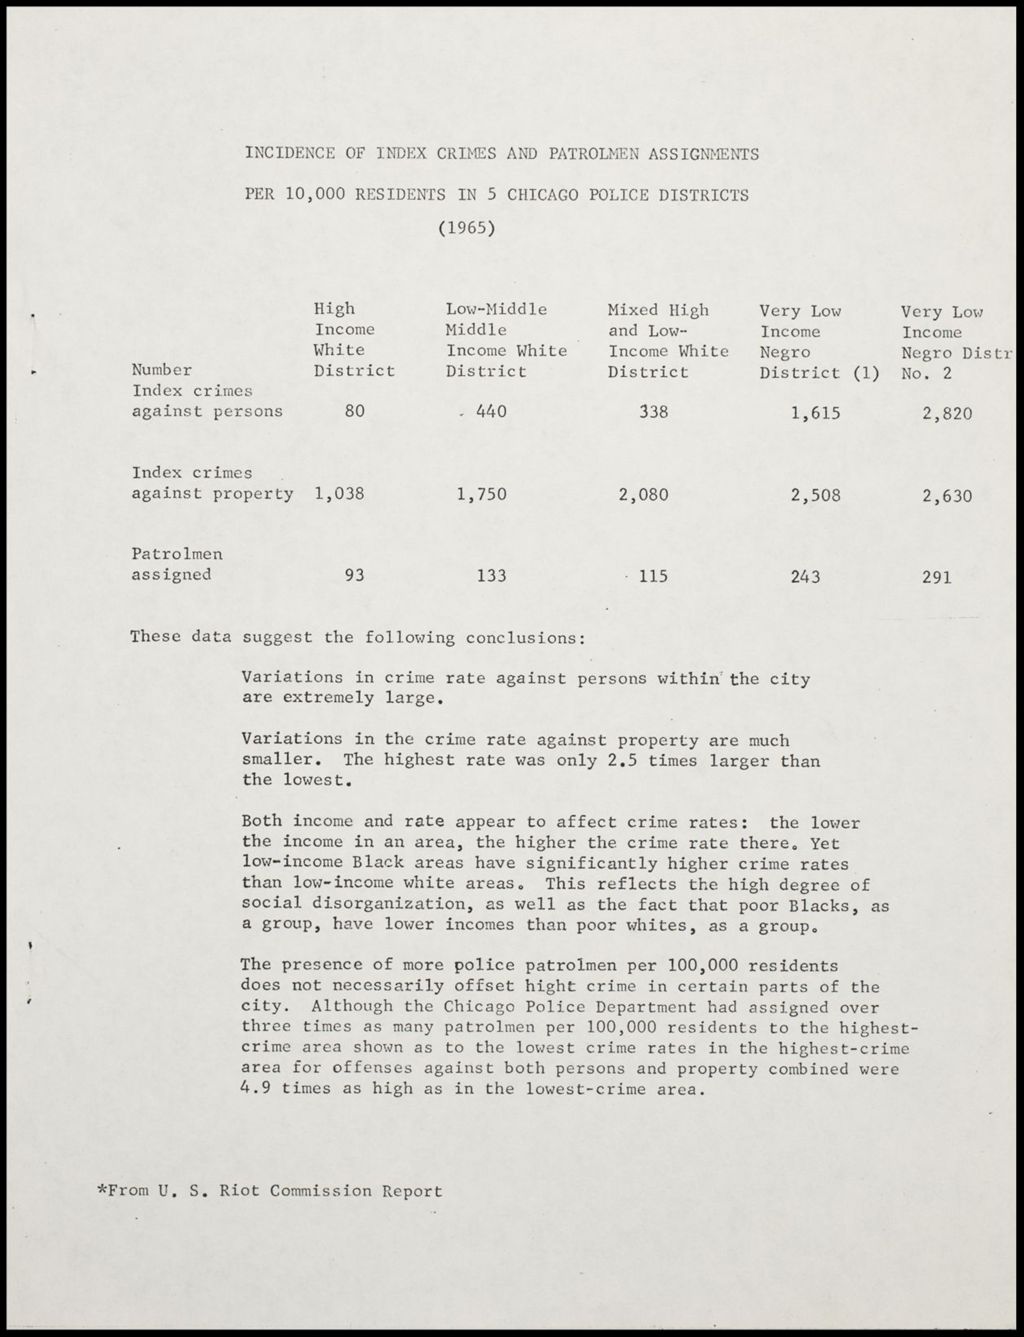 Miniature of Crime Statistics, 1965 (Folder IV-1300)